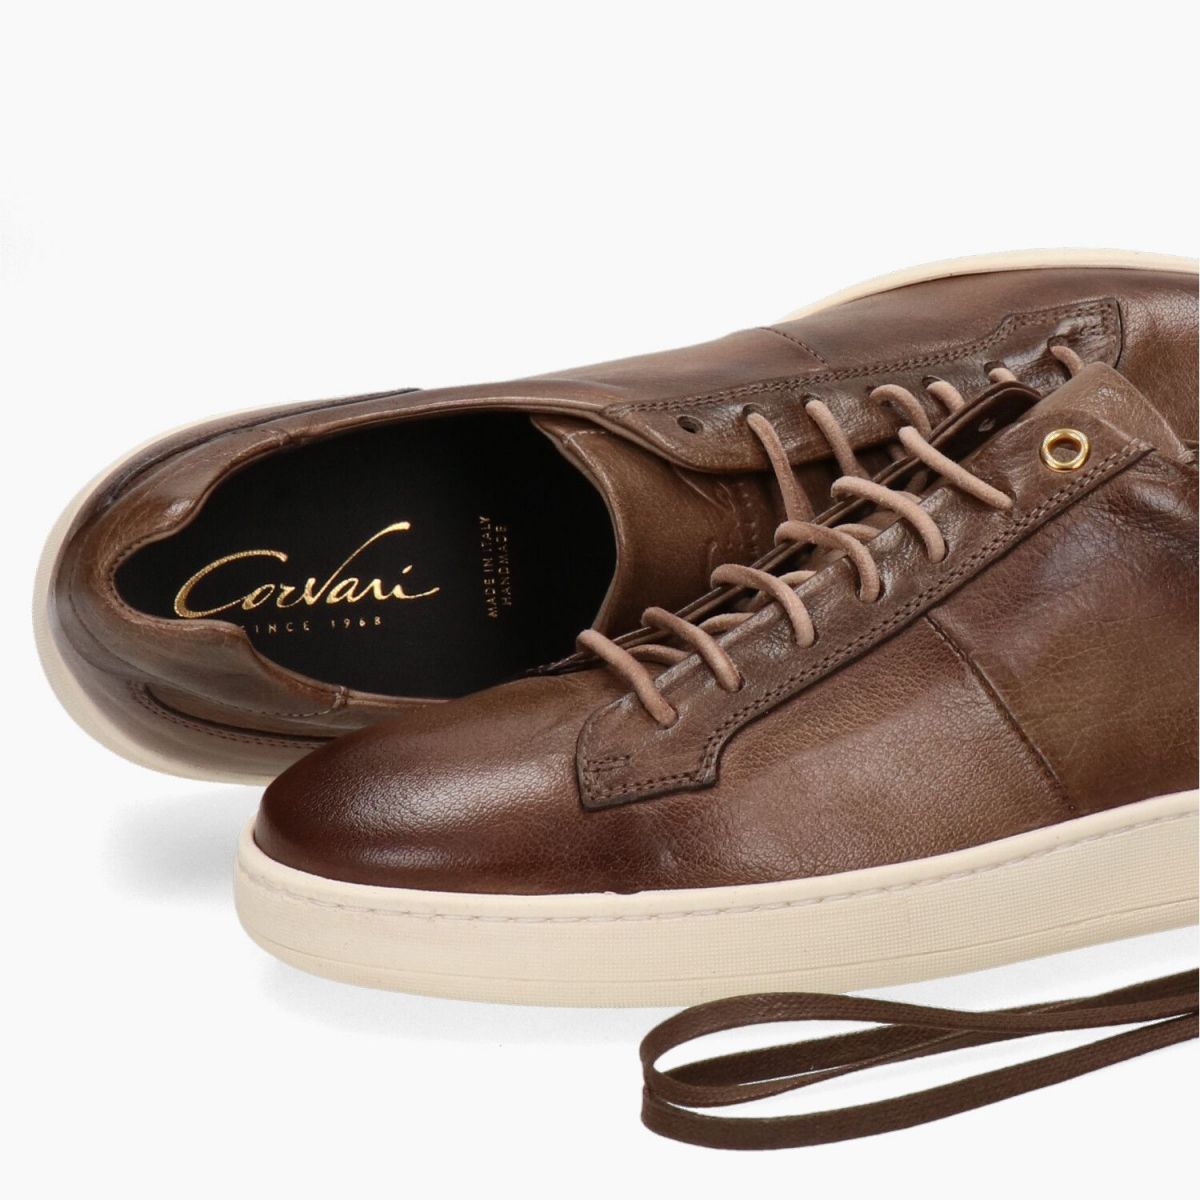 Corvari Sneakers Marrone 1426-MARRONE-022